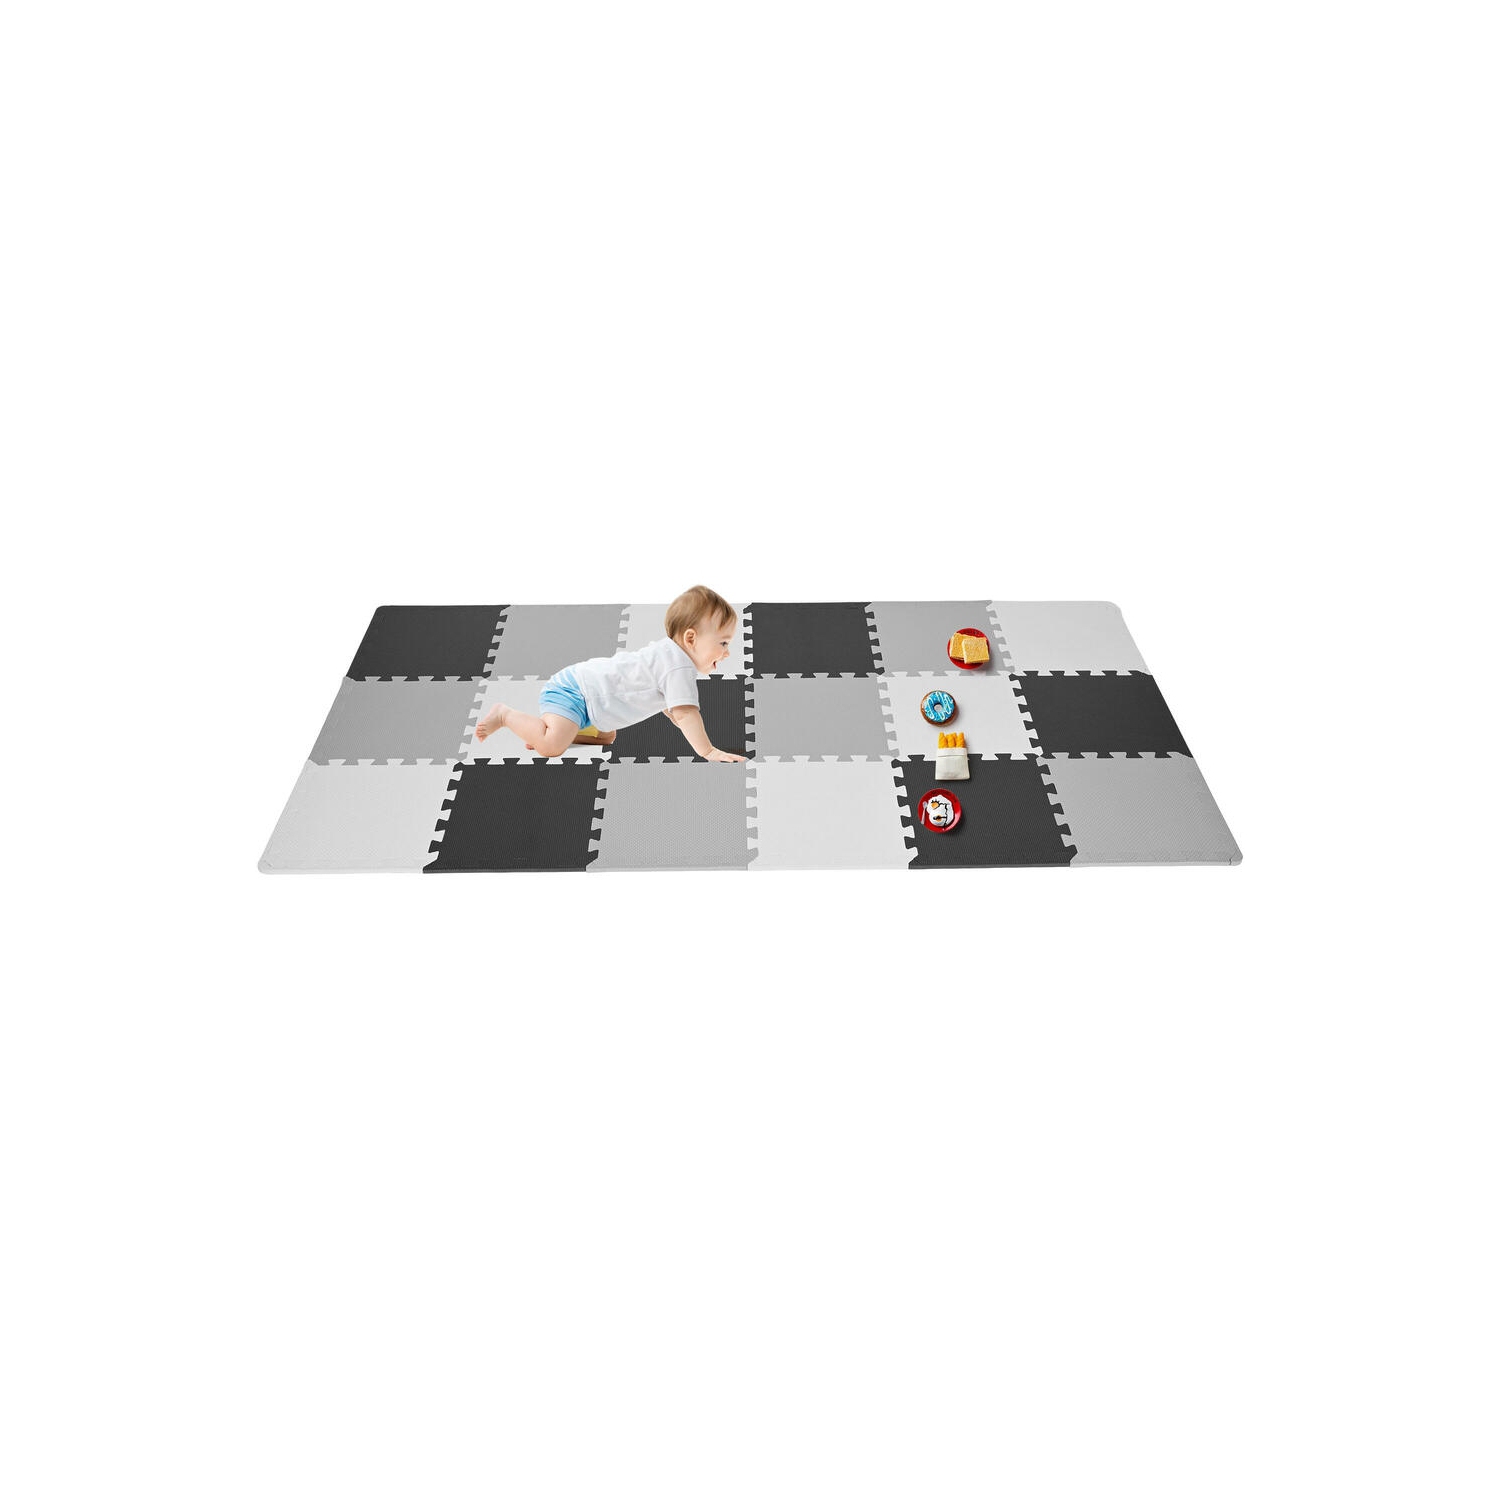 18pcs 1.62 Sqm Puzzle Portable Baby Playmats , EVA Foam Play Mat Crawling Floor Mats for Kids Toddler, Assembled Size 71.38" x 36.42"